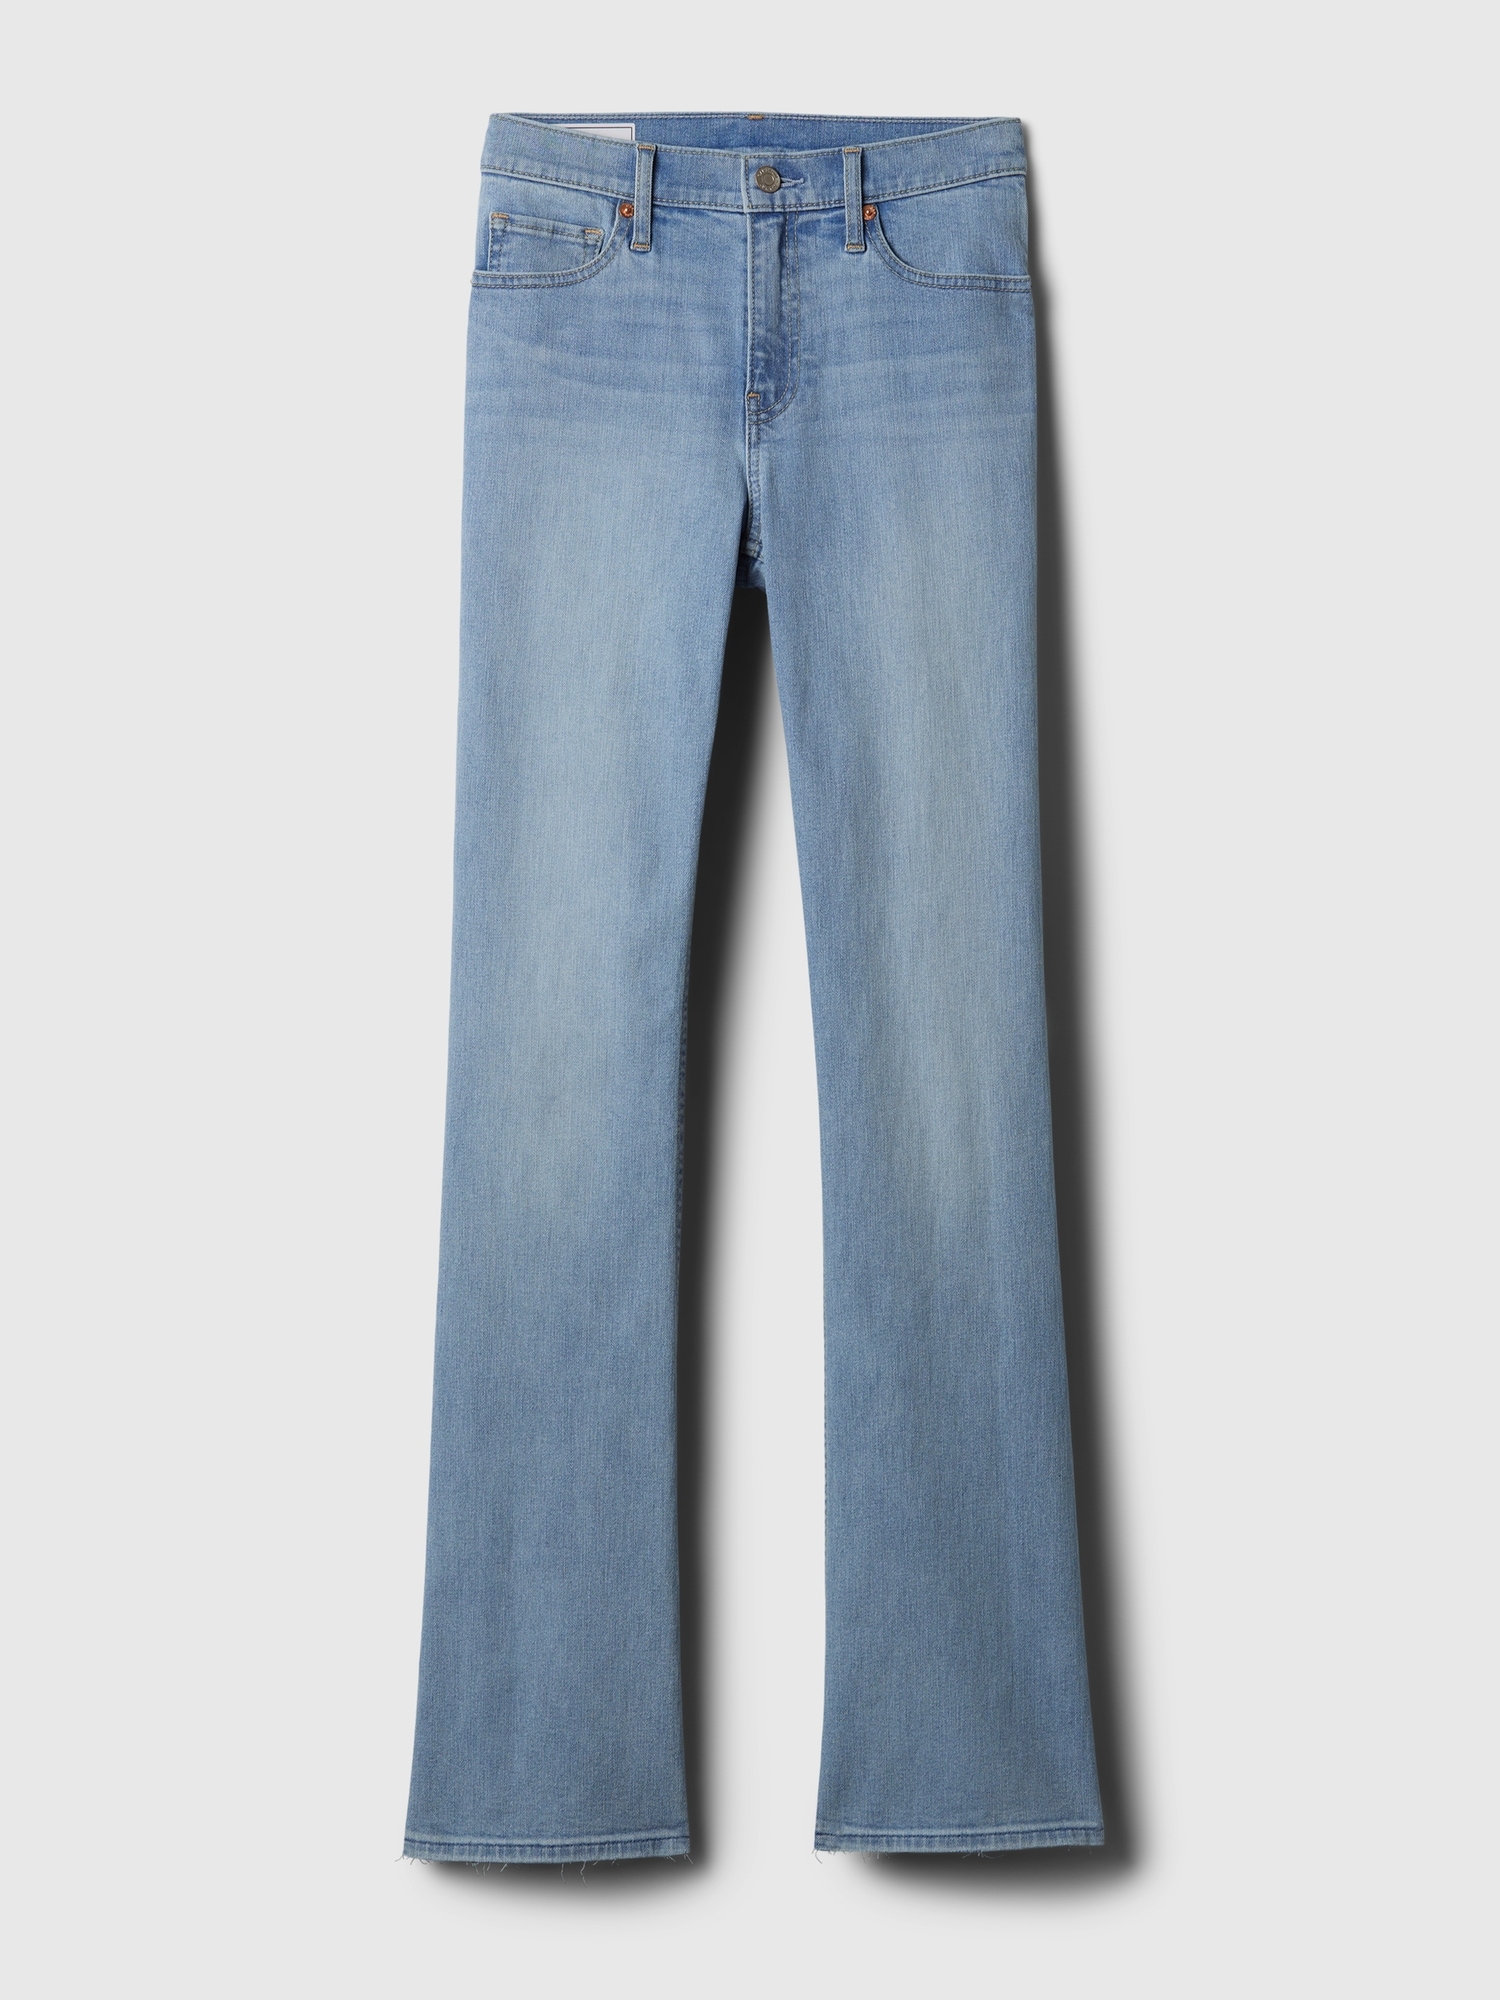 Buy Go Colors Women Solid Light Blue Denim Mid Rise Skinny Jeans online